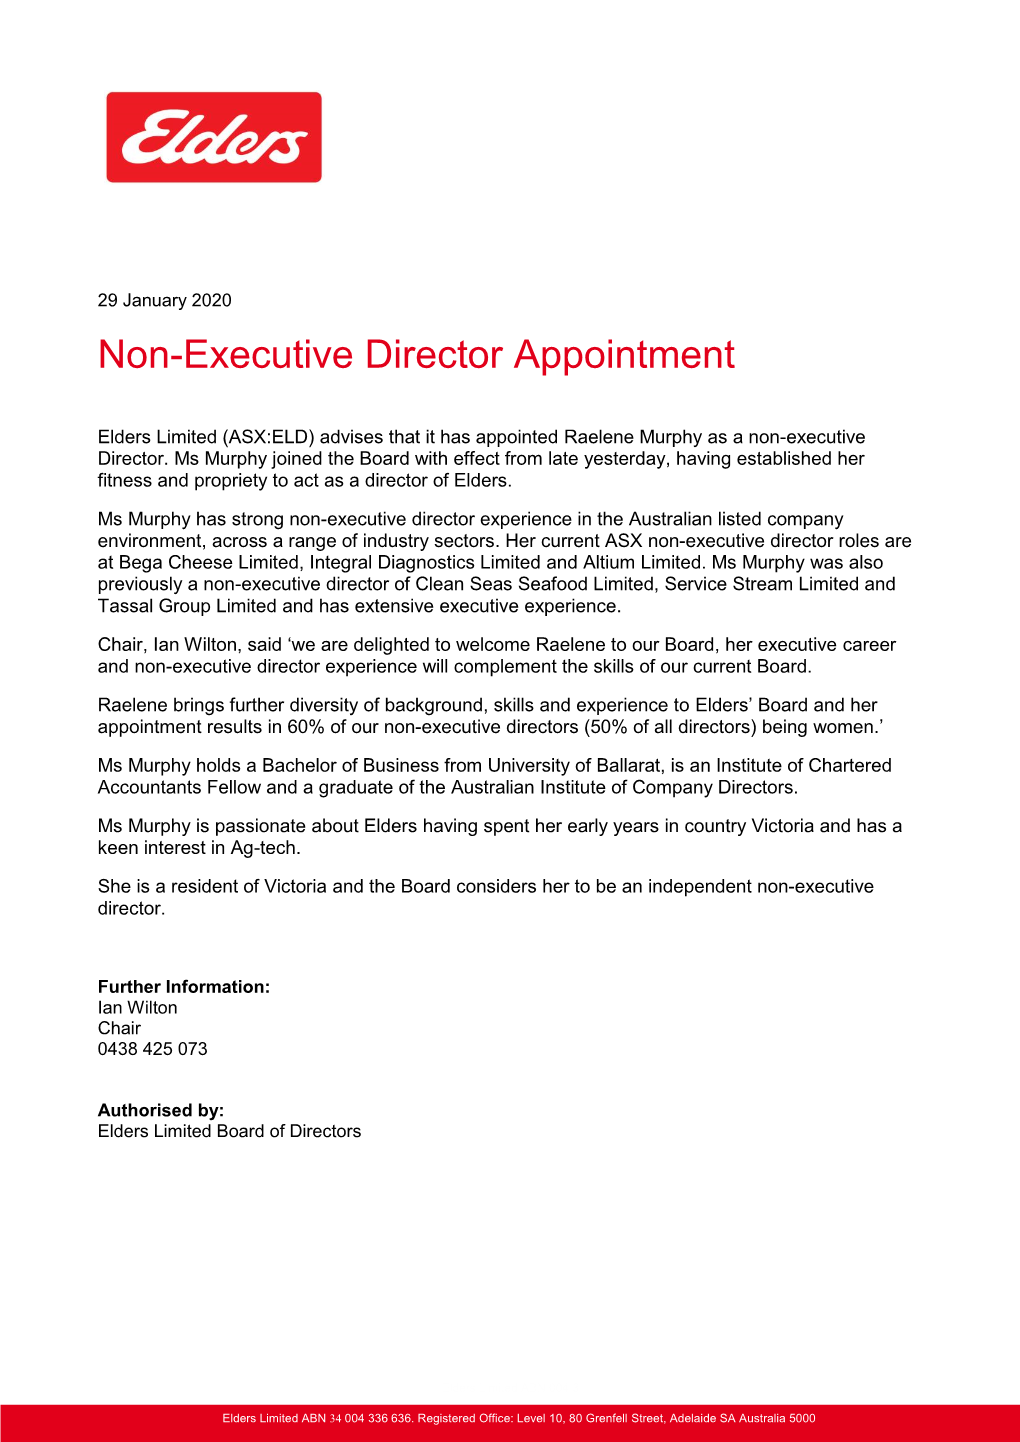 Non-Executive Director Appointment